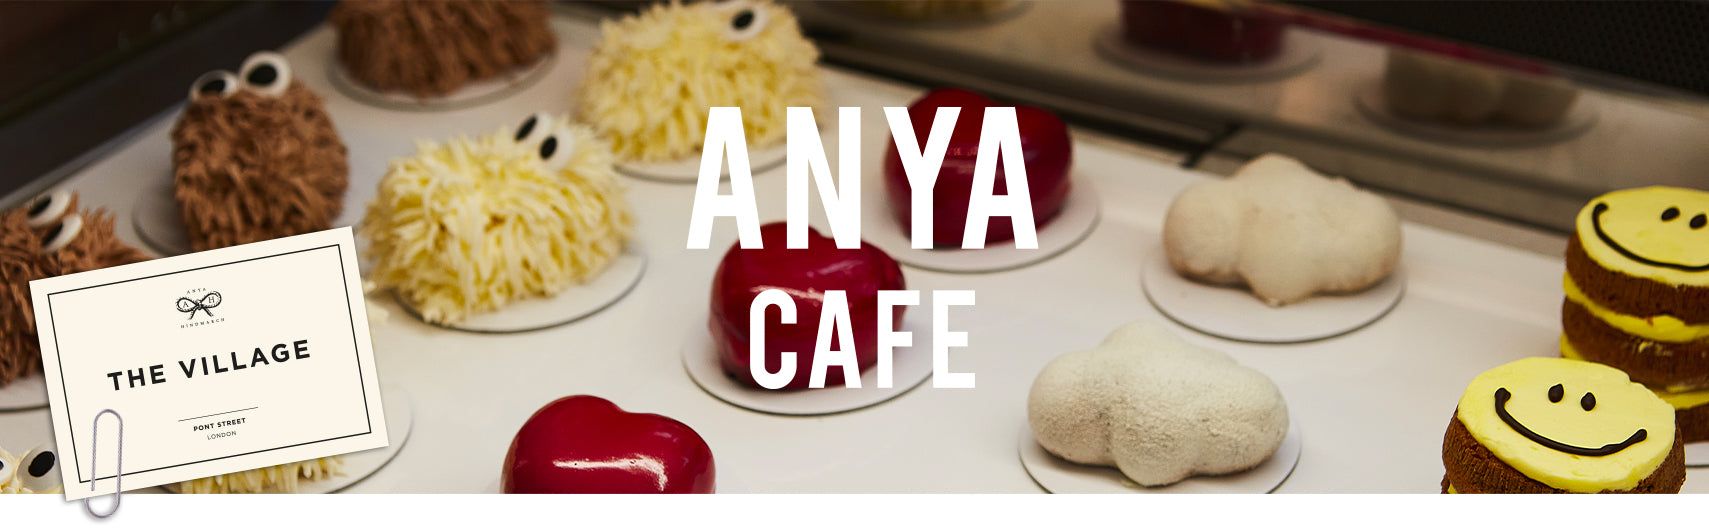 Anya cafe アニヤハインドマーチ